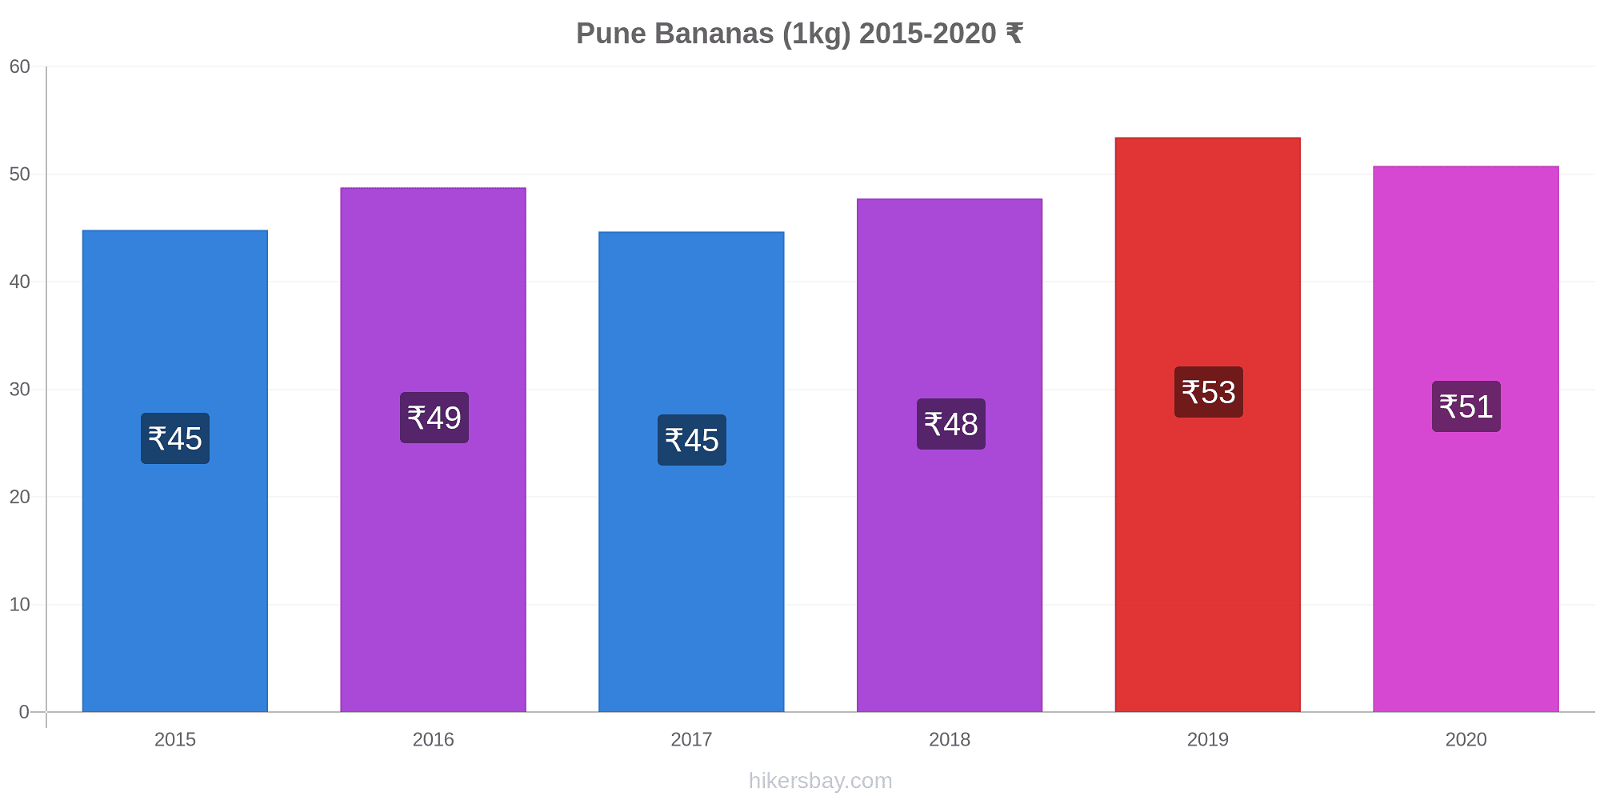 Pune price changes Bananas (1kg) hikersbay.com